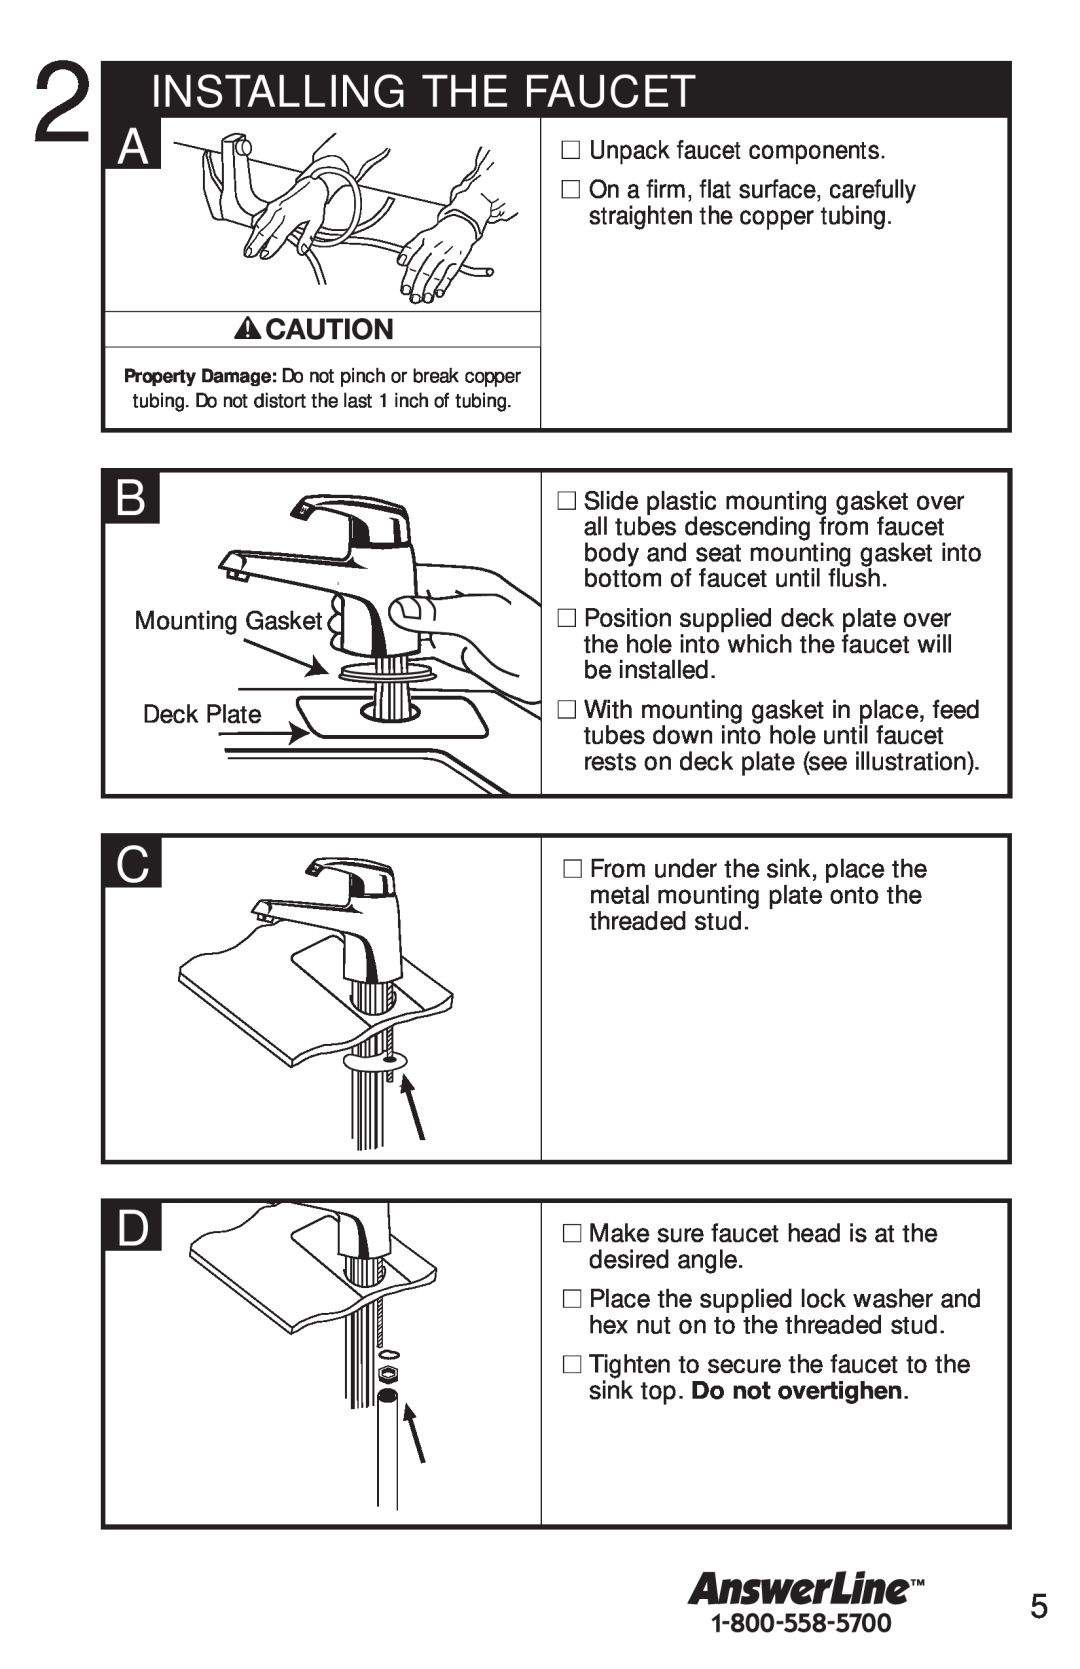 InSinkErator FAUCET owner manual Installing The Faucet 